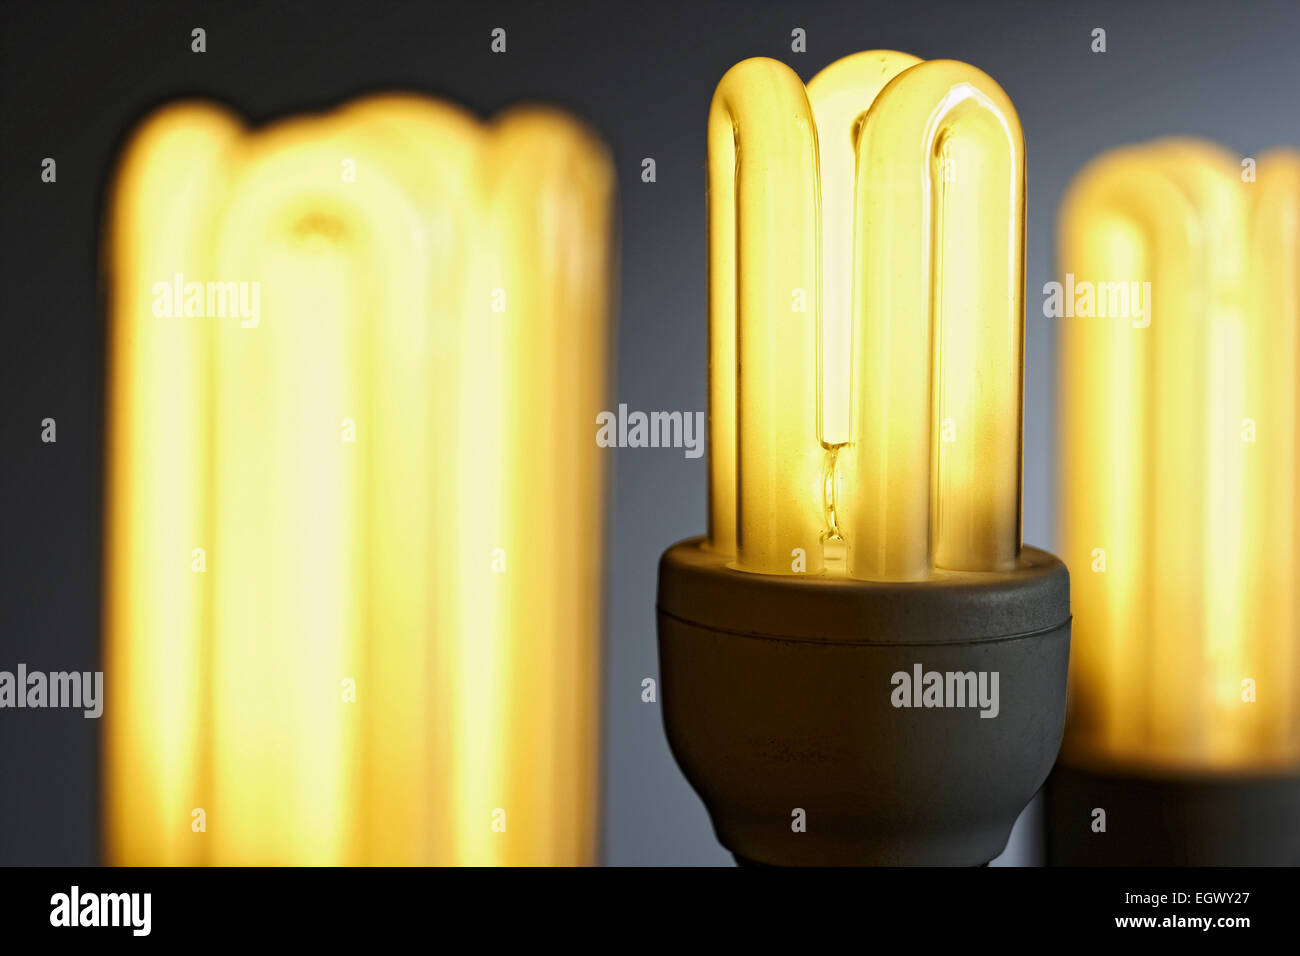 Energy-saving lightbulbs Stock Photo